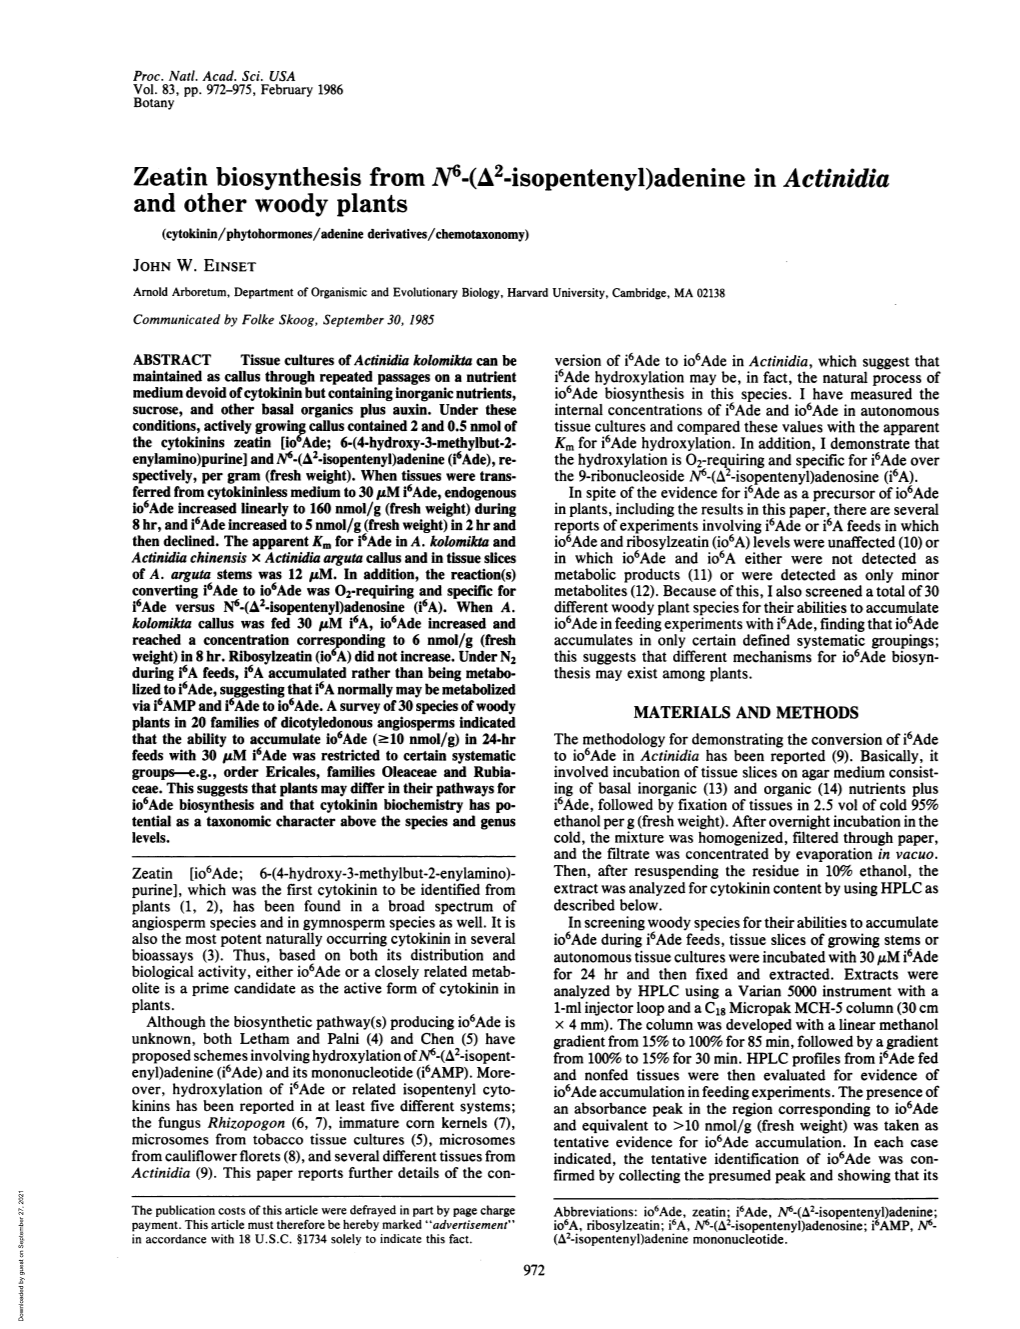 Zeatin Biosynthesis from N6-(A2-Isopentenyl)Adenine in Actinidia and Other Woody Plants (Cytokinin/Phytohormones/Adenine Derivatives/Chemotaxonomy) JOHN W